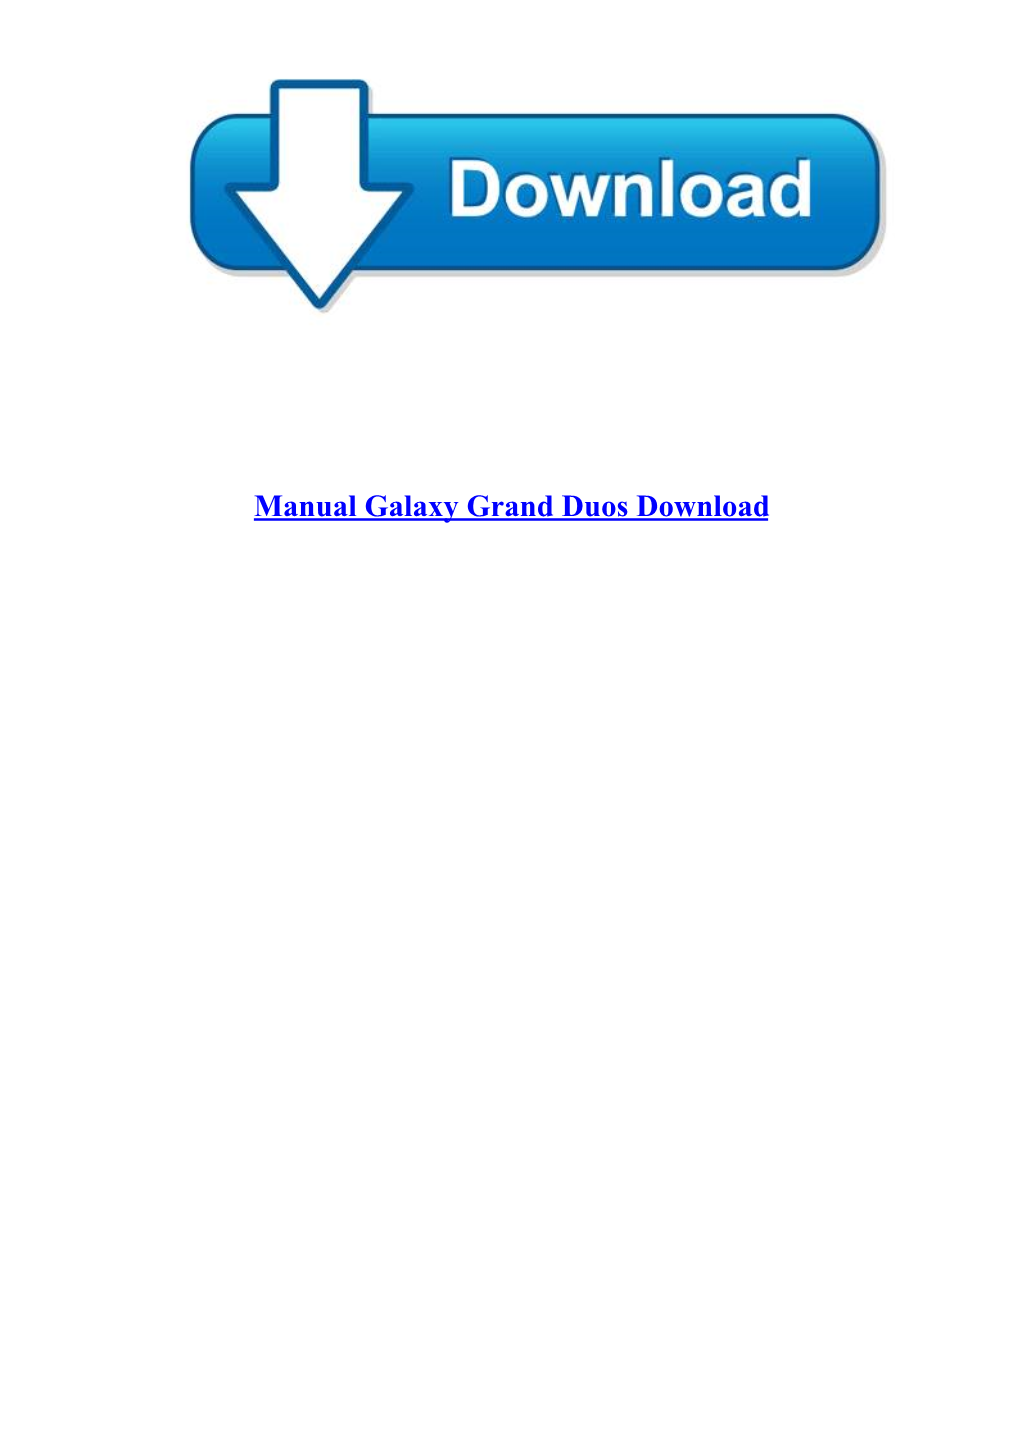 Manual Galaxy Grand Duos Download Manual Galaxy Grand Duos